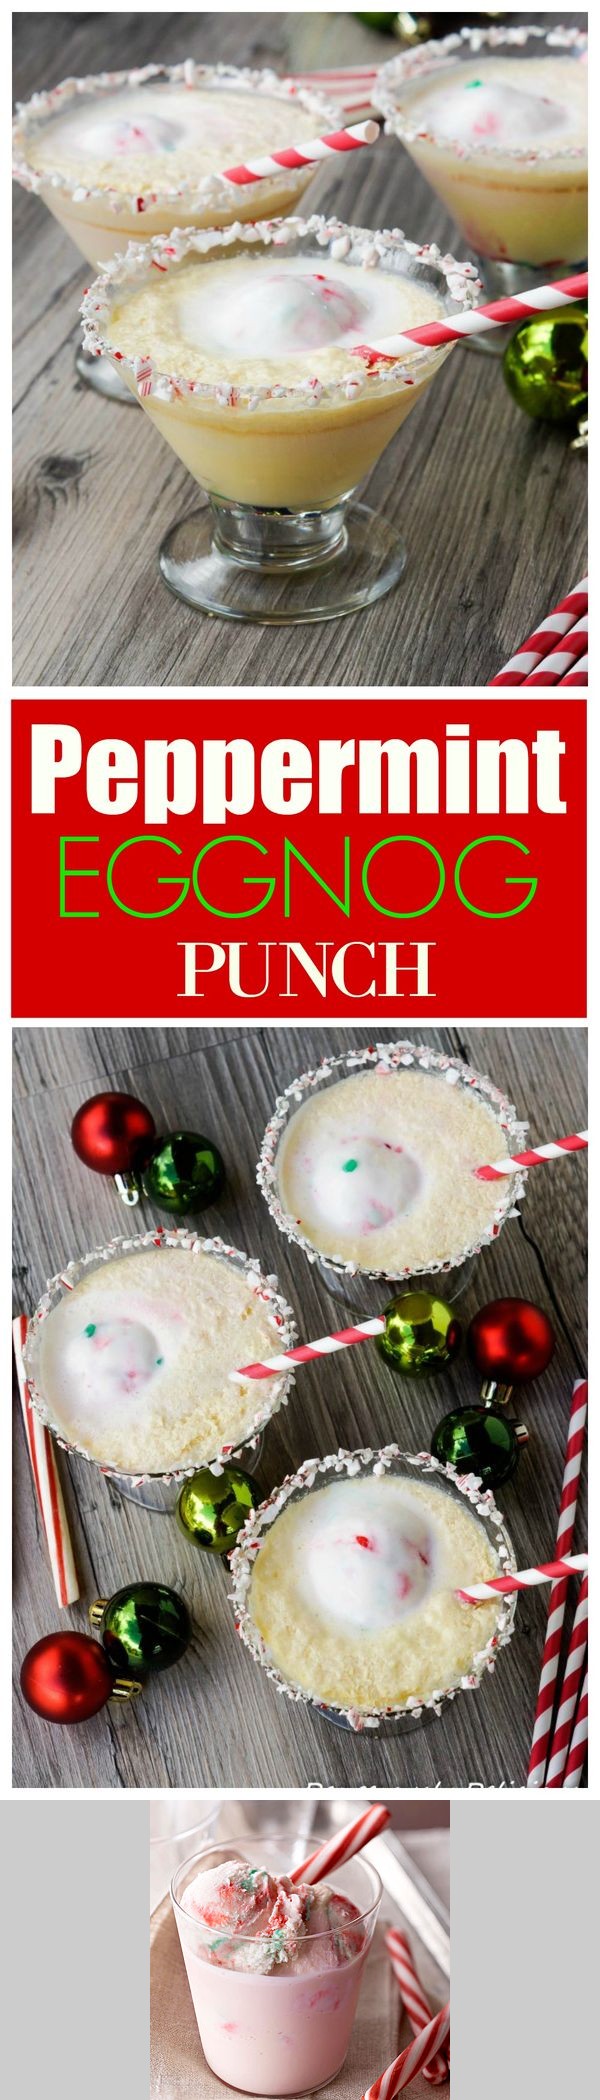 Peppermint-Eggnog Punch